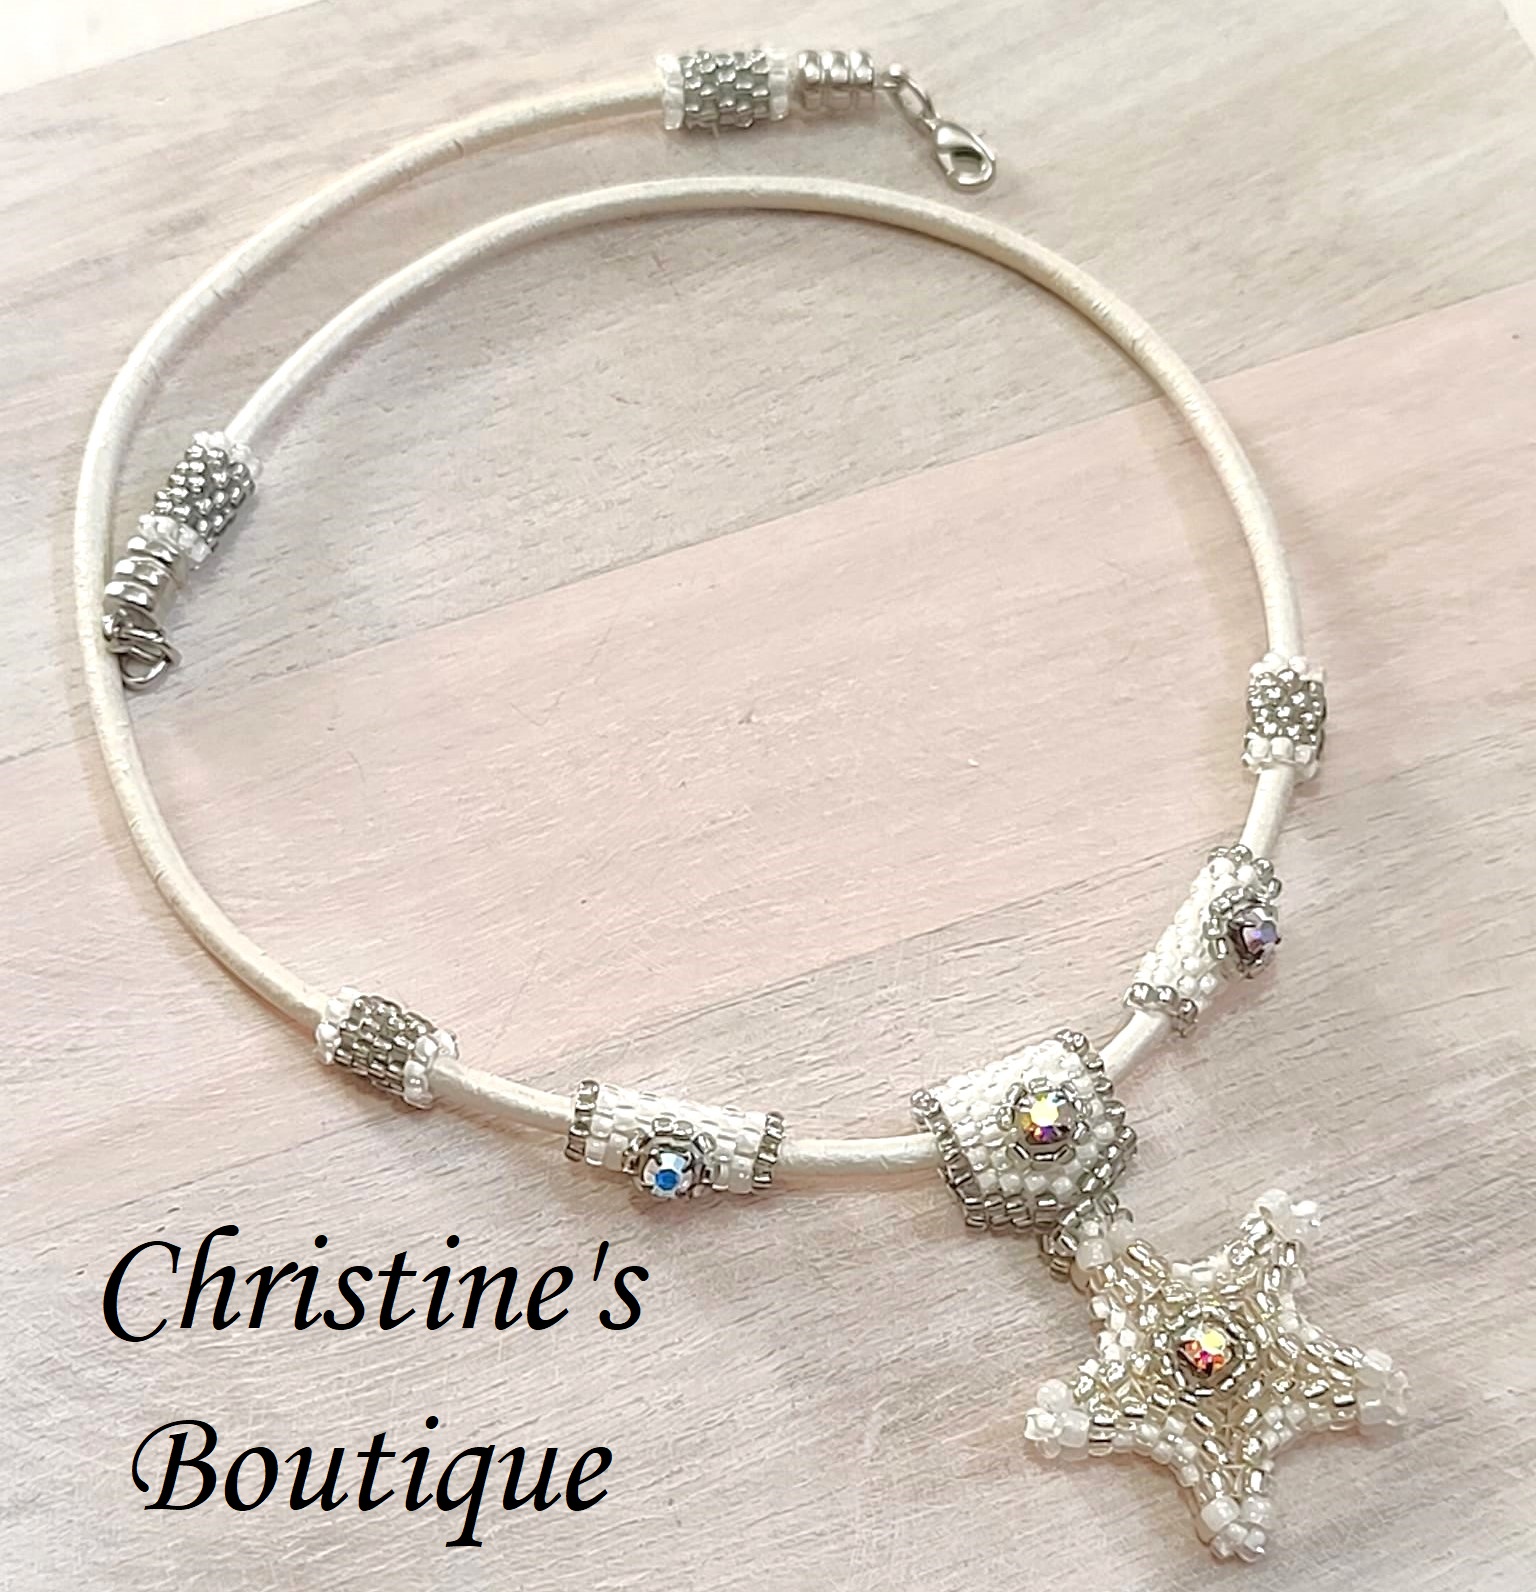 Starfish pendant necklace, w/auroa borealis crystal on leather - Click Image to Close